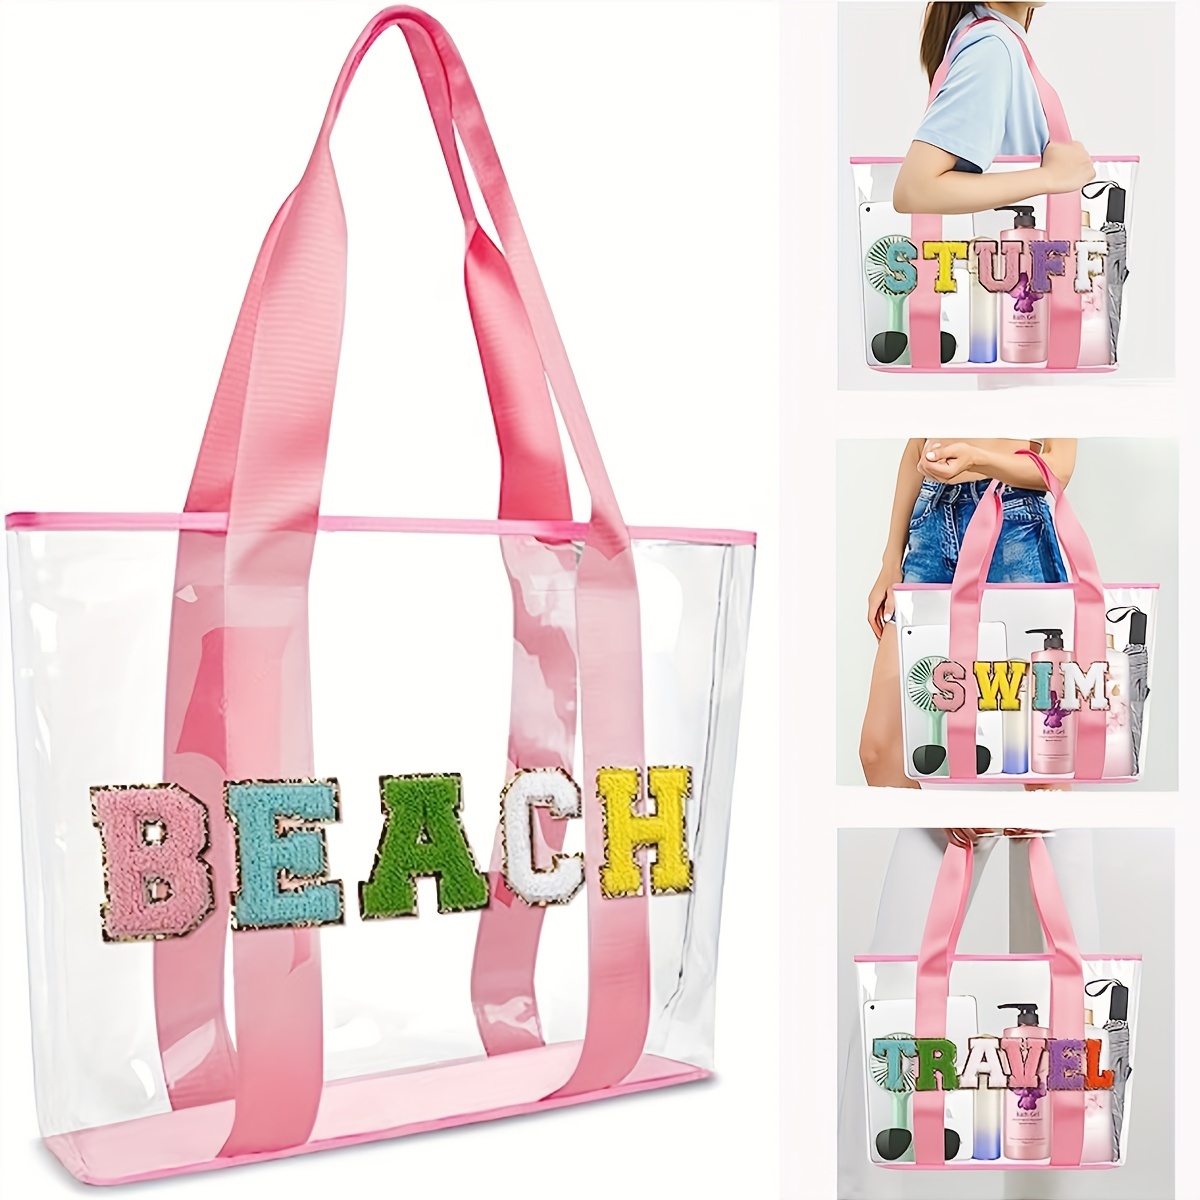 

Chenille Letter Patch Tote Bag, Clear Pvc Pink Shoulder Bag, Women's Fashion Handbag & Purse For Beach, Travel